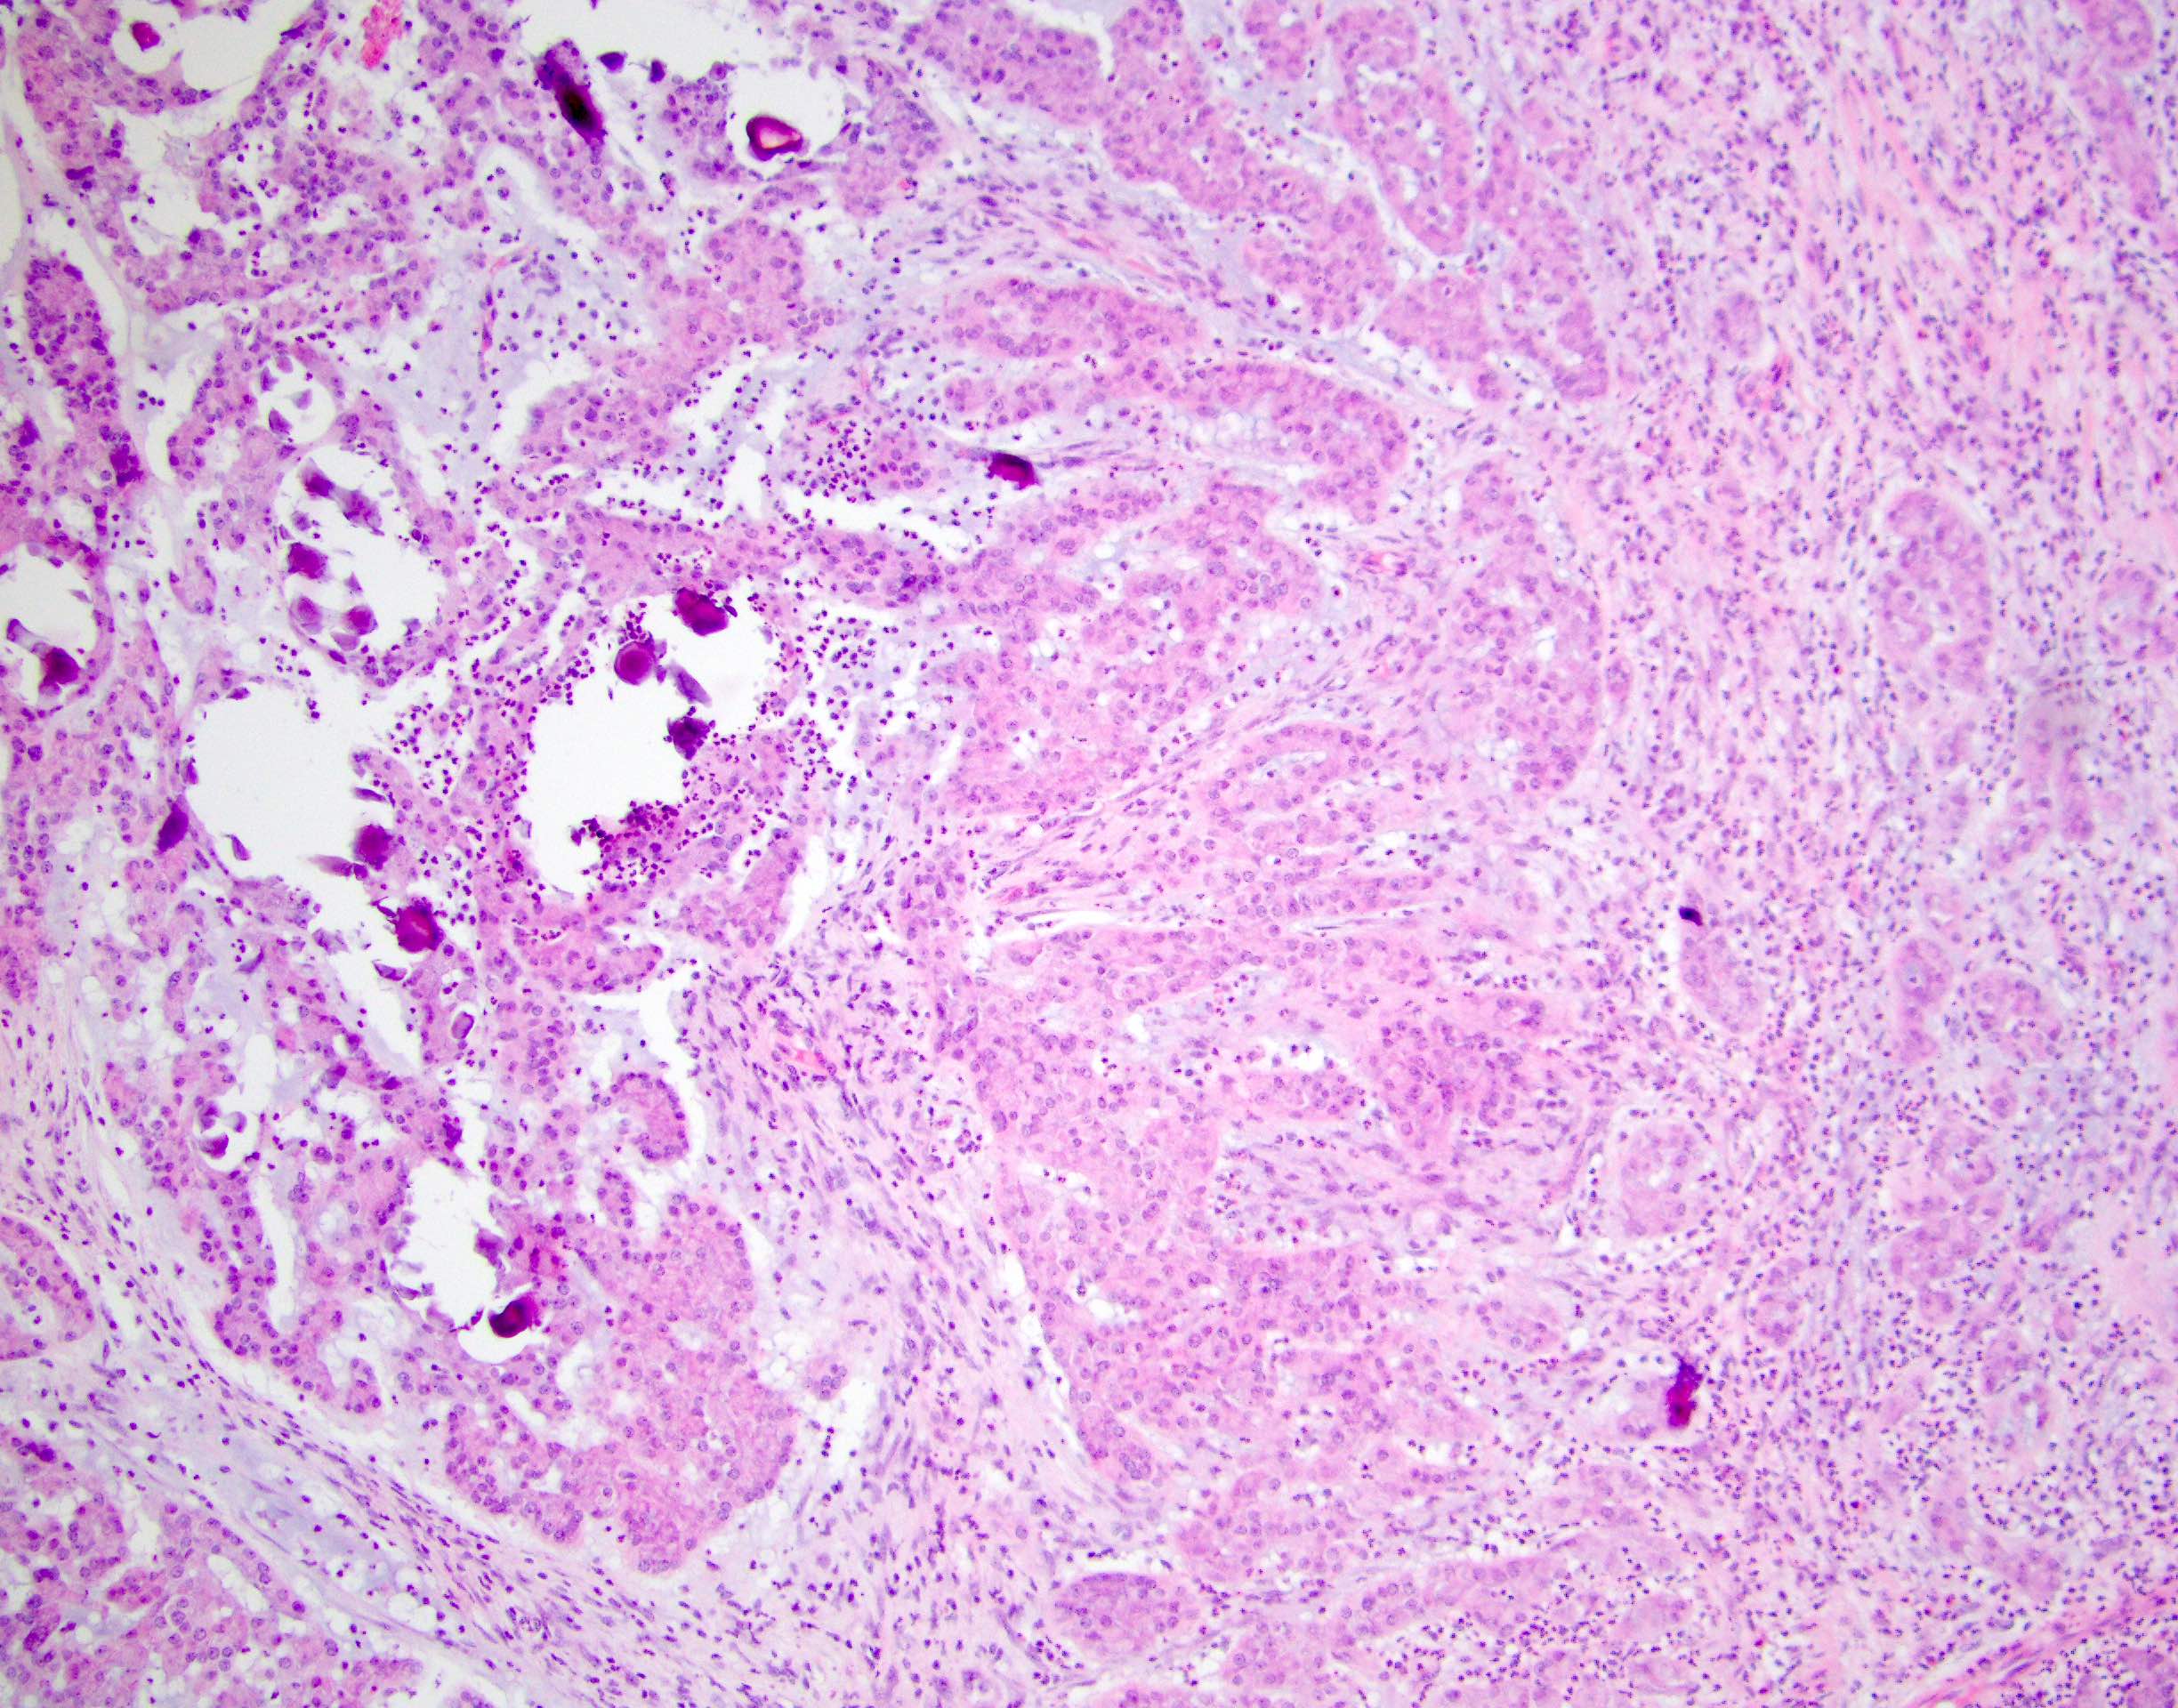 Pathology Outlines - Large cell calcifying Sertoli cell tumor